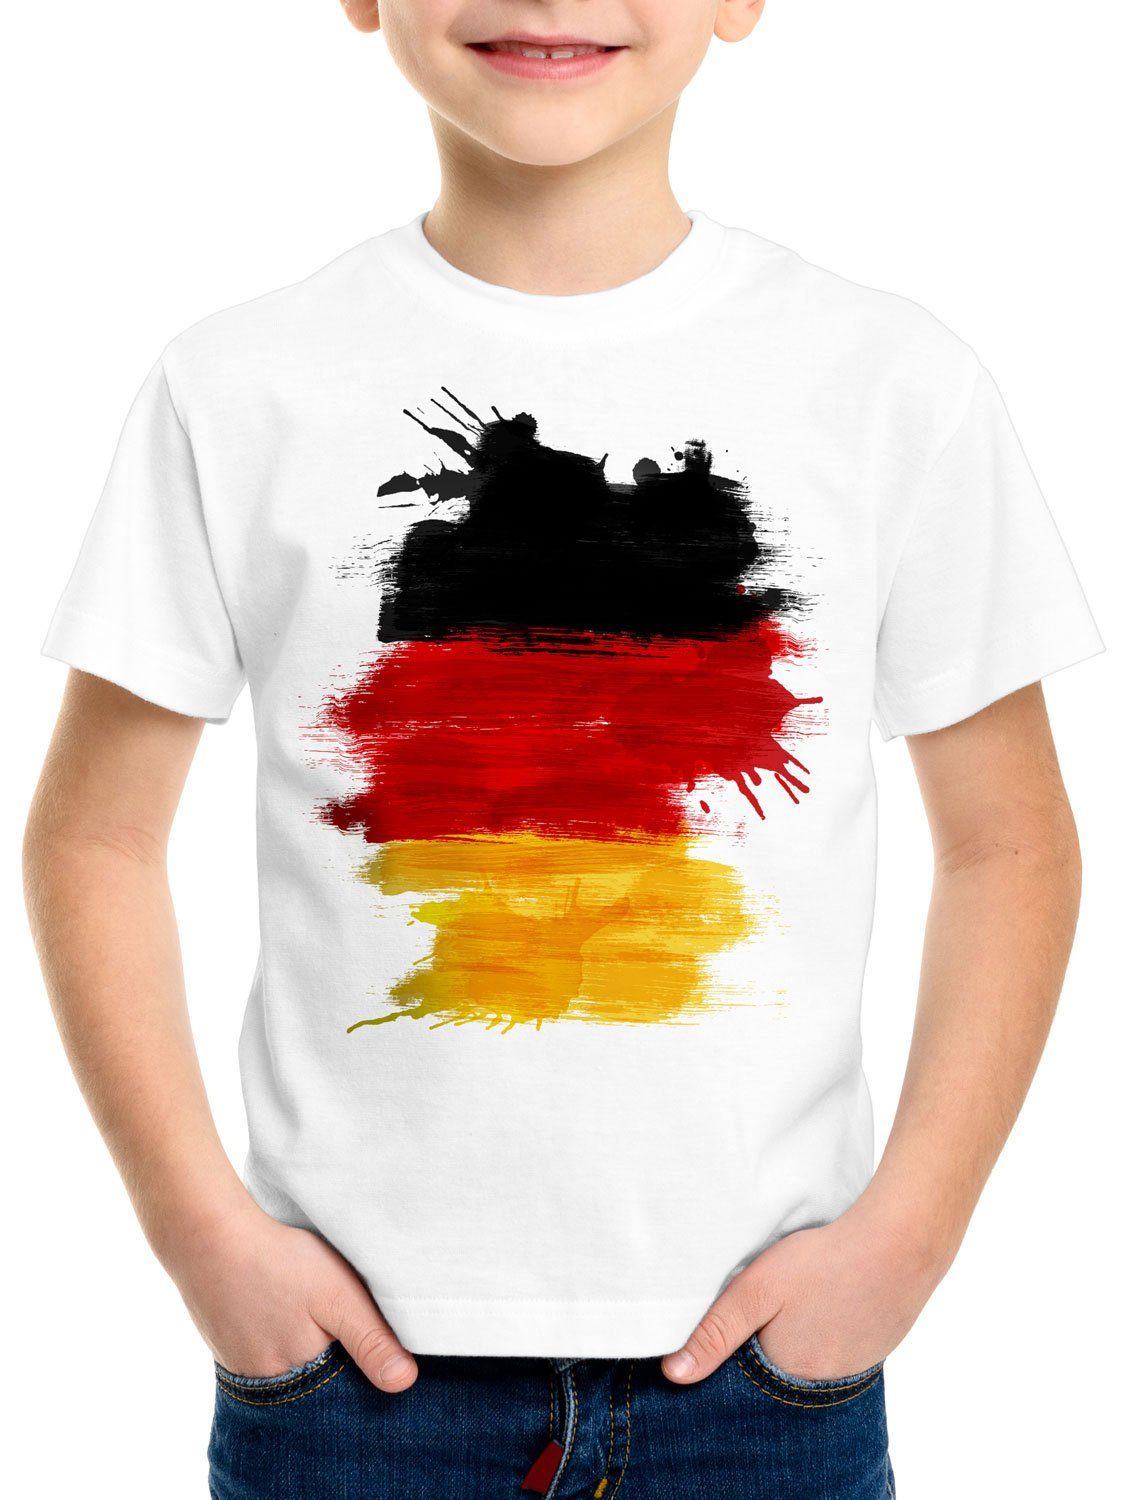 style3 Print-Shirt Kinder T-Shirt Flagge Deutschland Fußball Sport Germany WM EM Fahne weiß